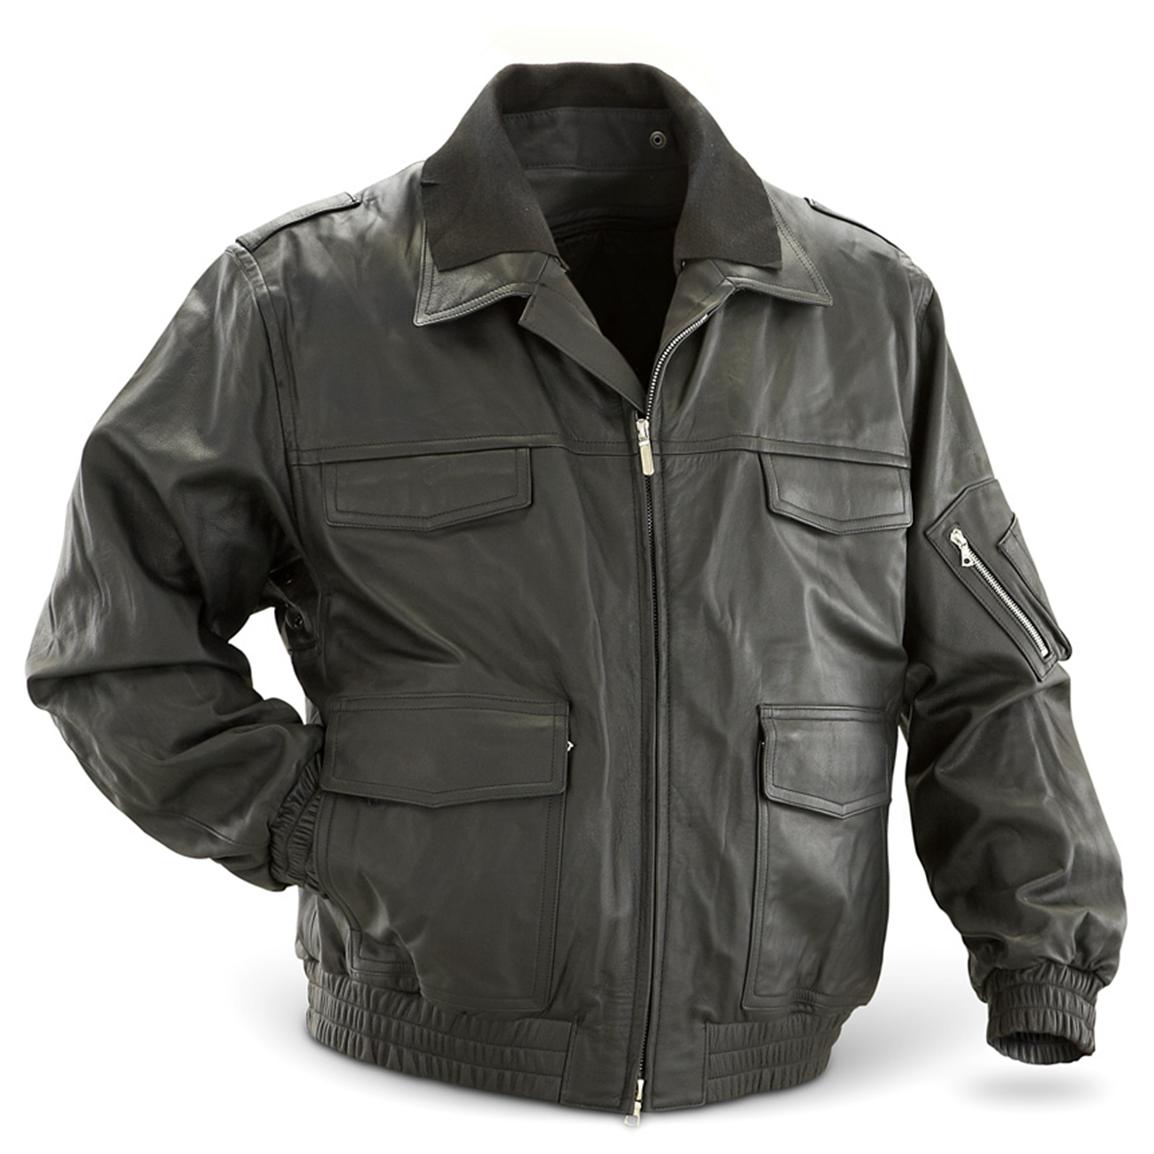 Police Leather Jacket 46